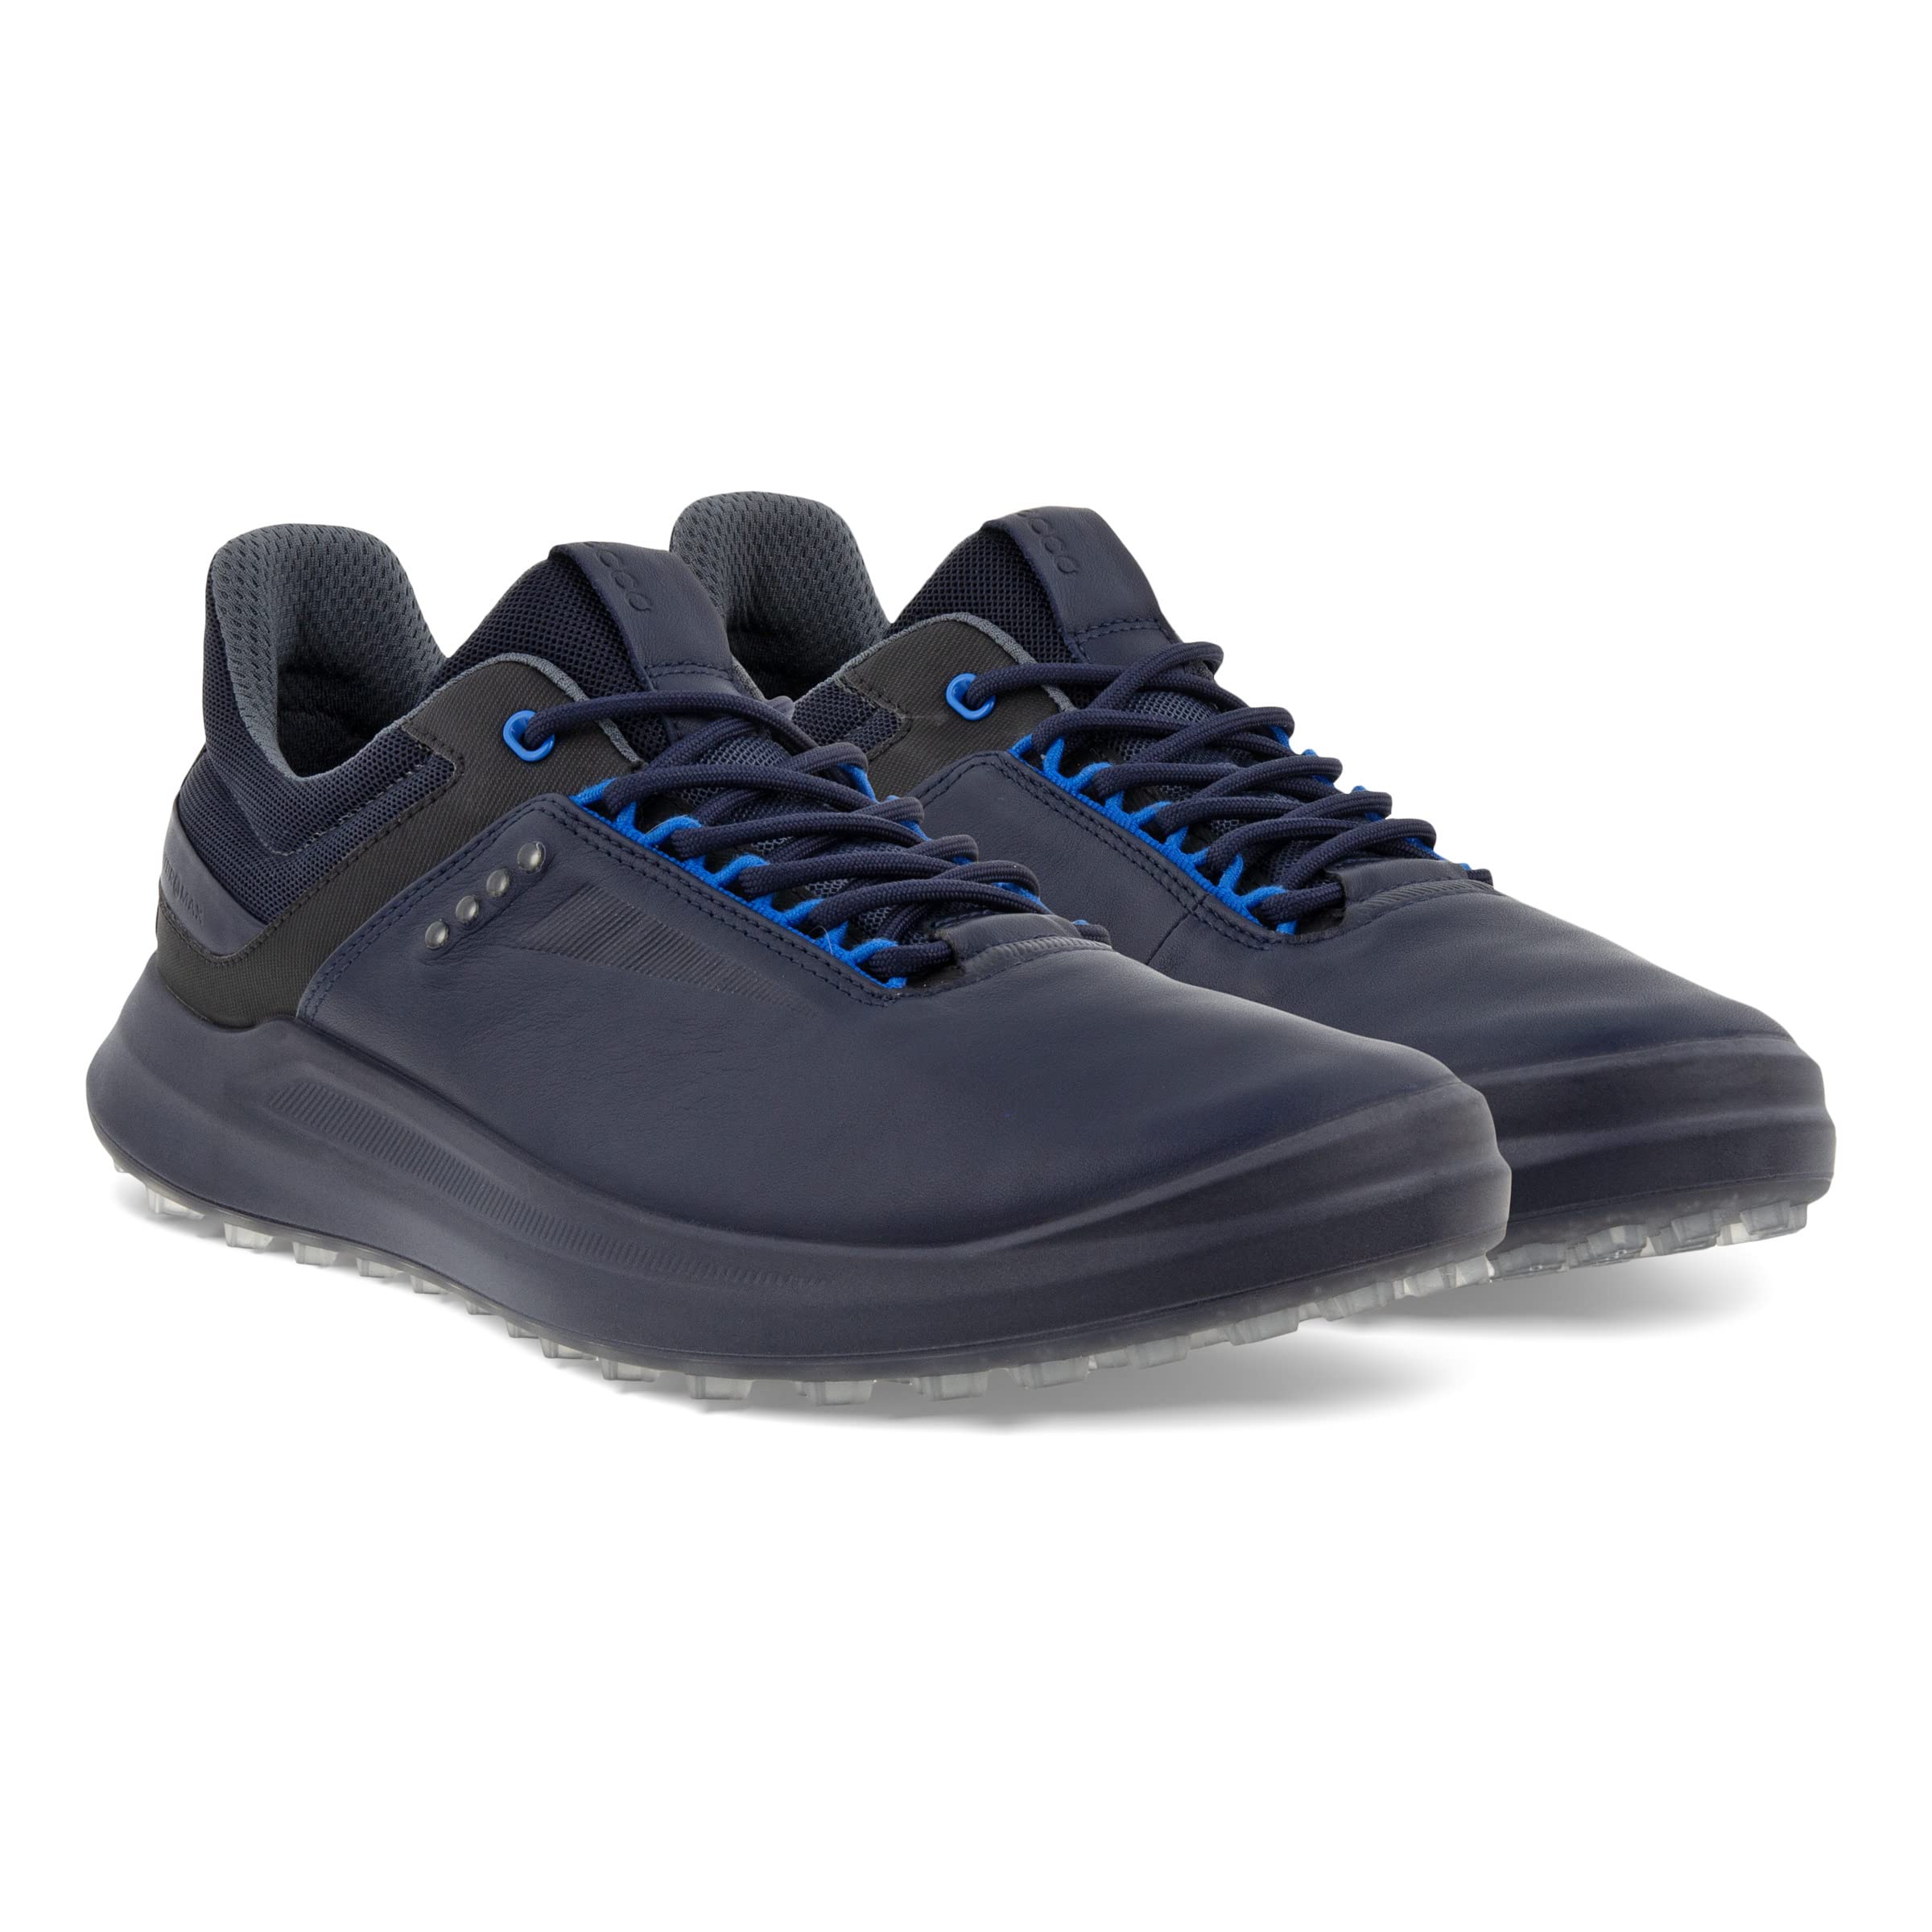 ECCO Men's Golf Core Hydromax Water Resistant Shoe